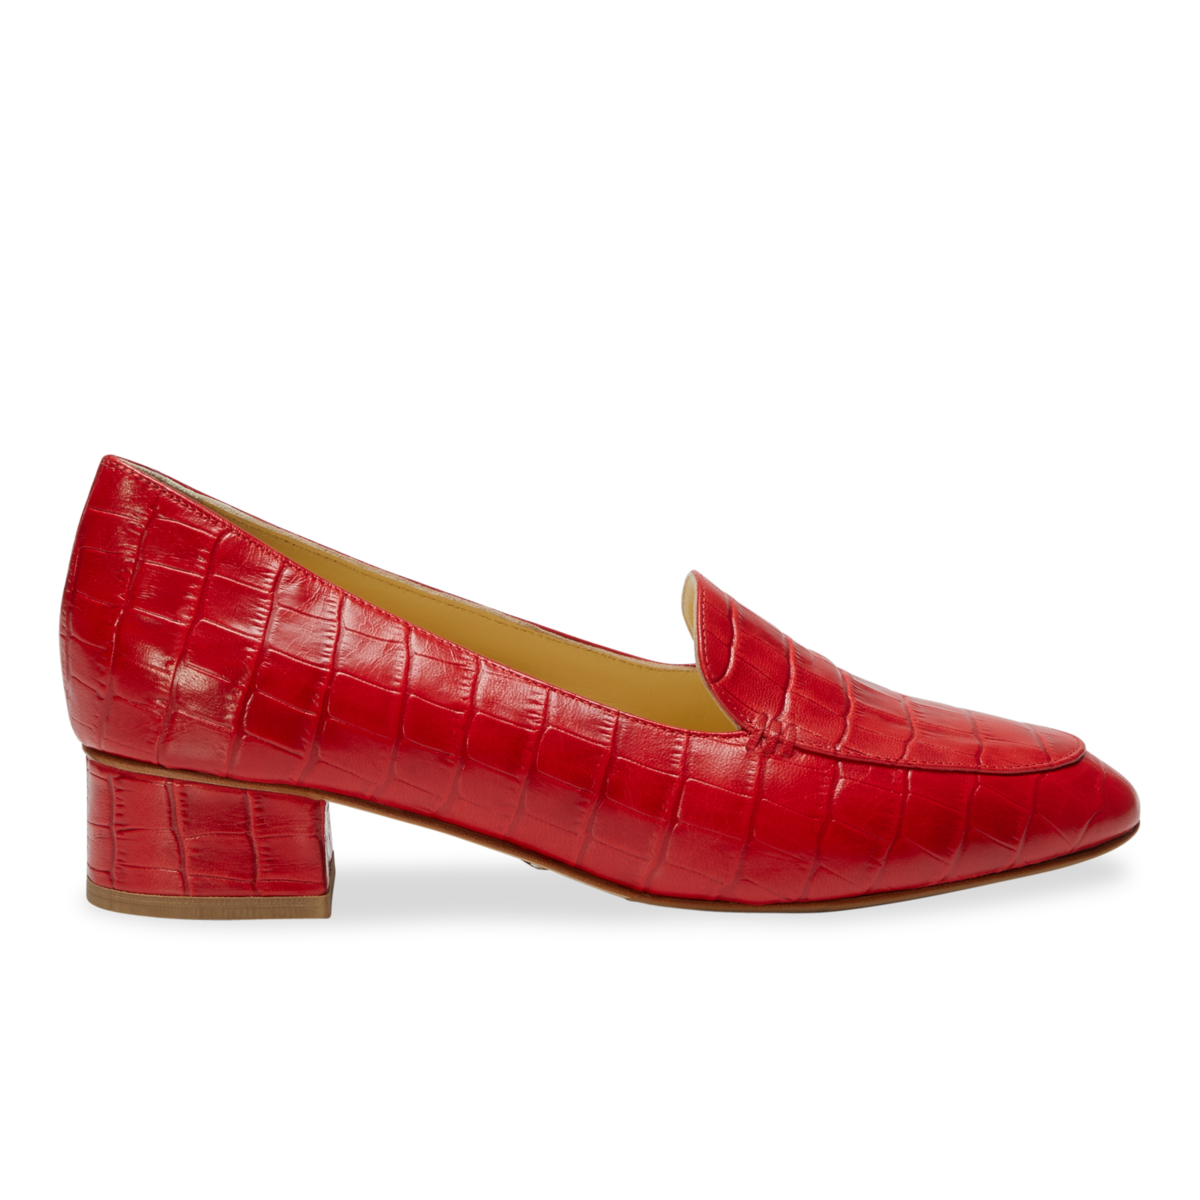 red under heel shoes